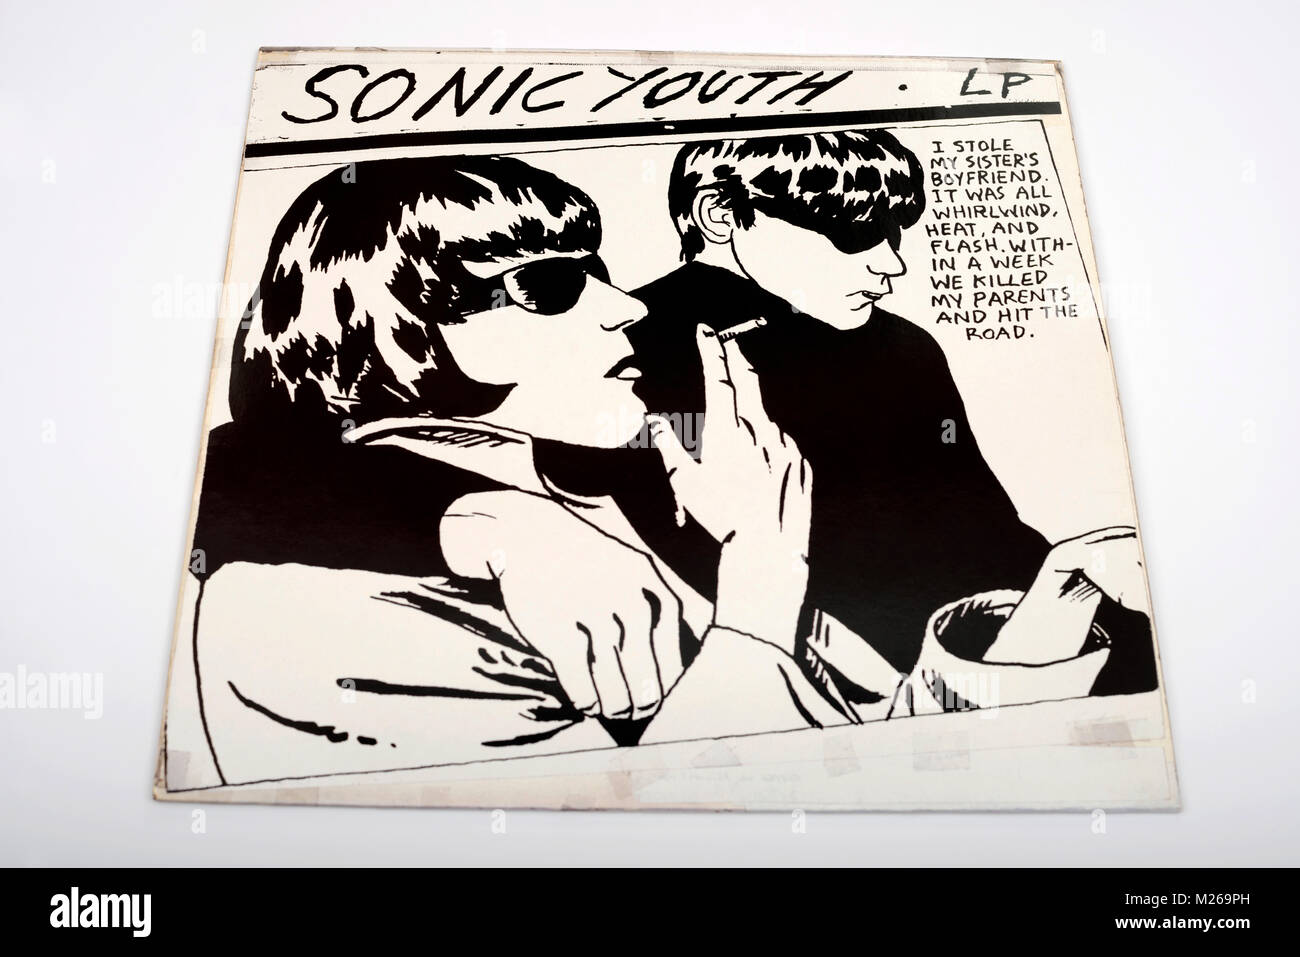 Sonic Youth LP Stockfoto